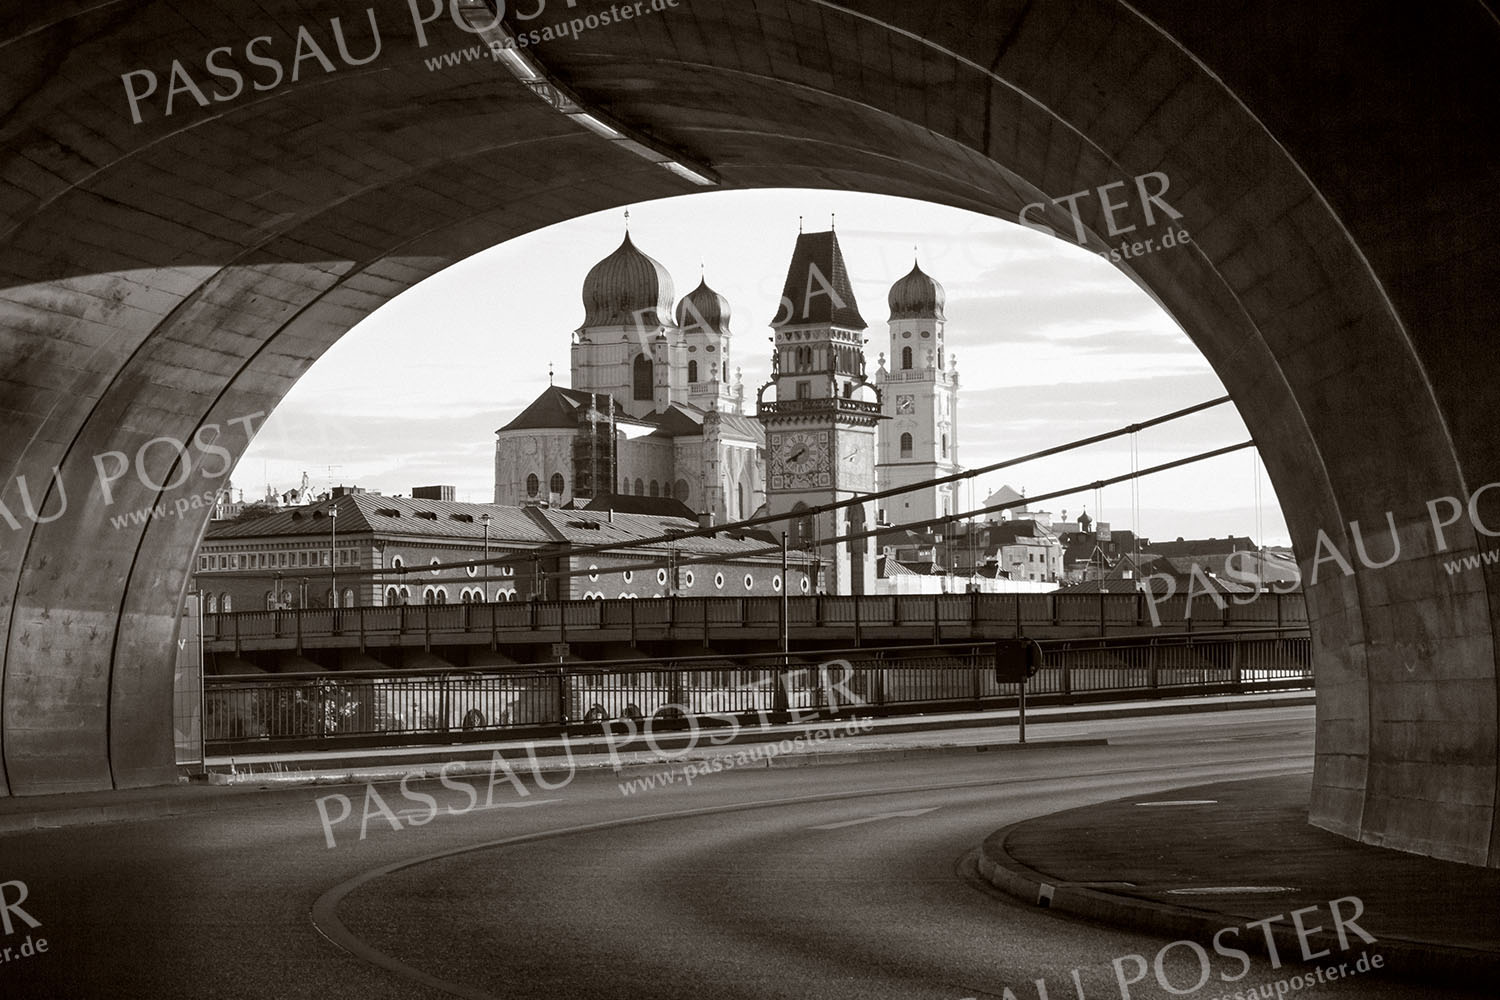 Passau Poster - Passauer Ansichten